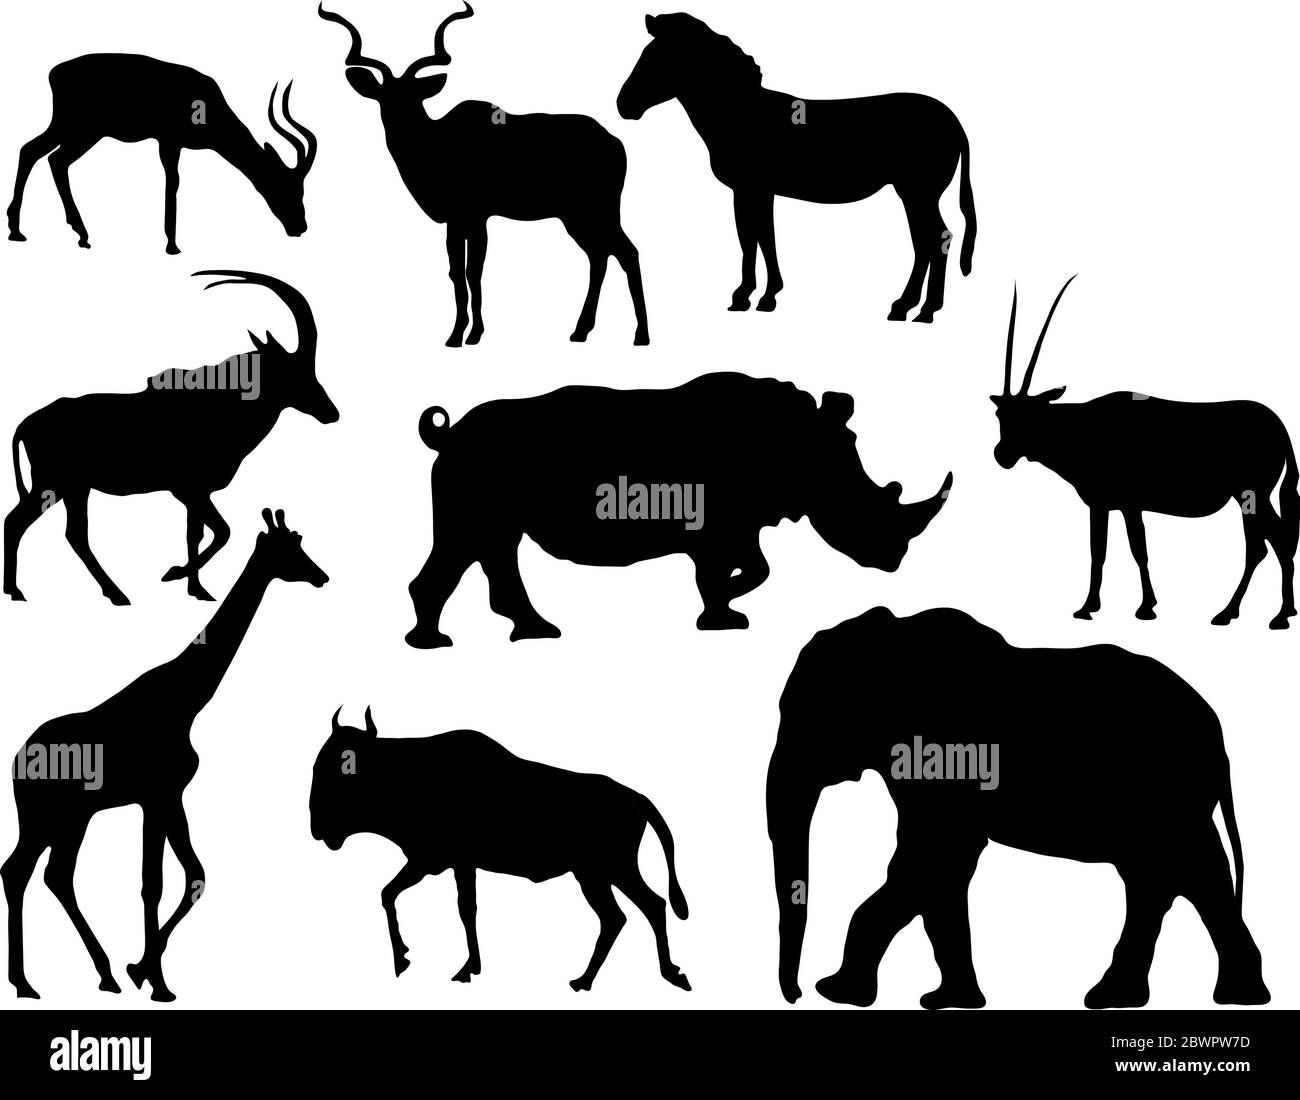 African animal silhouettes (Herbivores, elephant, giraffe, various antelope, rhinoceros and zebra) Stock Vector